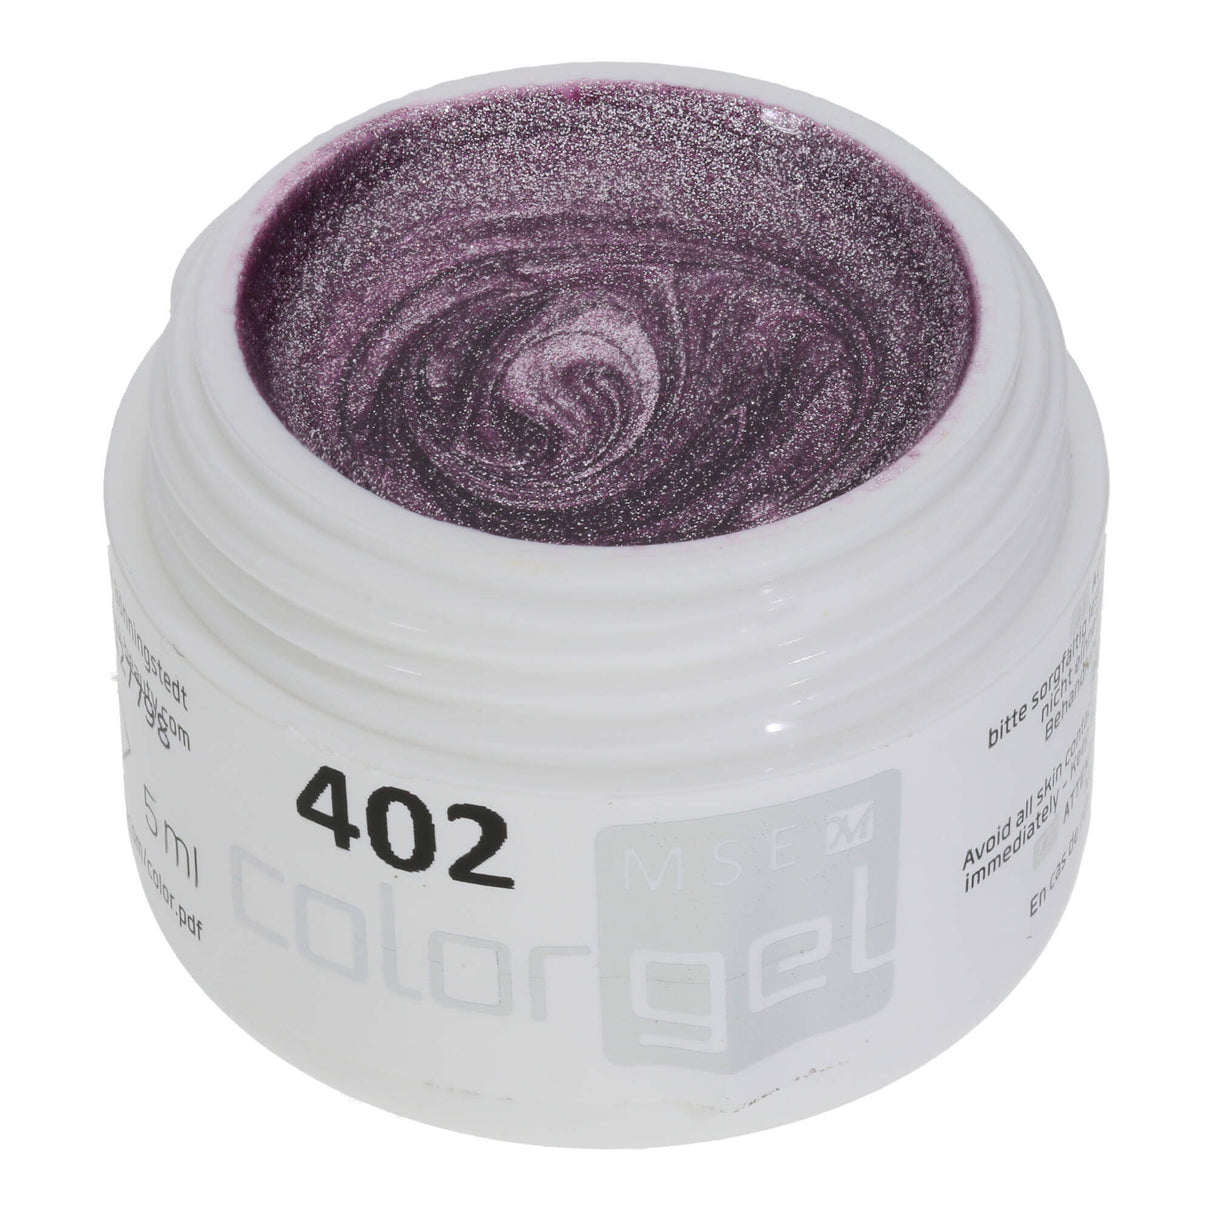 # 402 Premium EFFECT Color Gel 5ml màu hồng kim loại